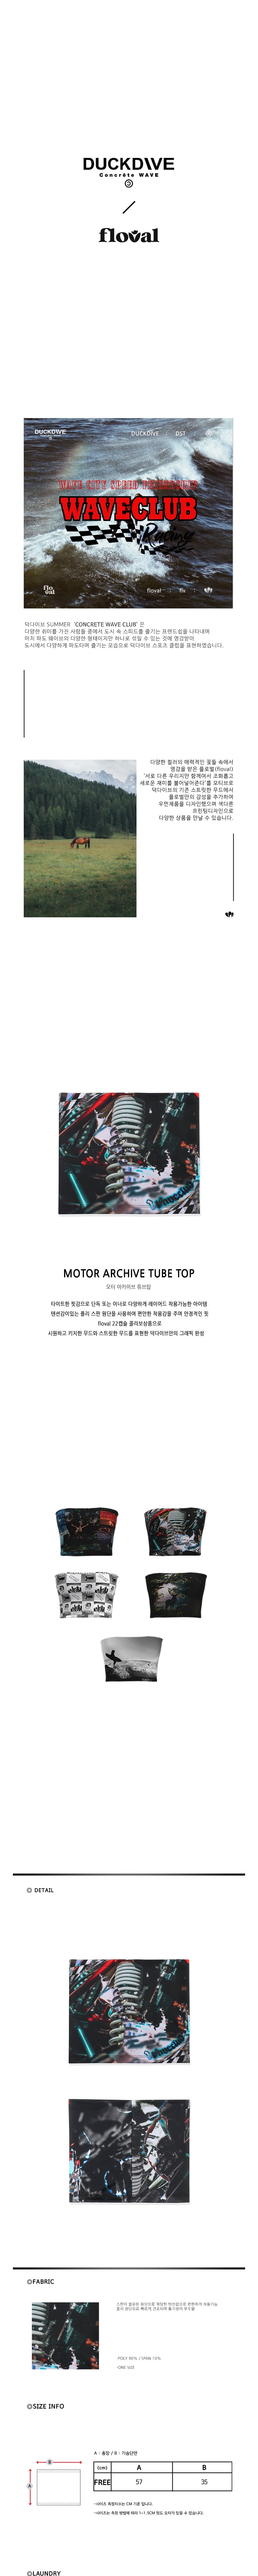 Motor Archive Tube Top